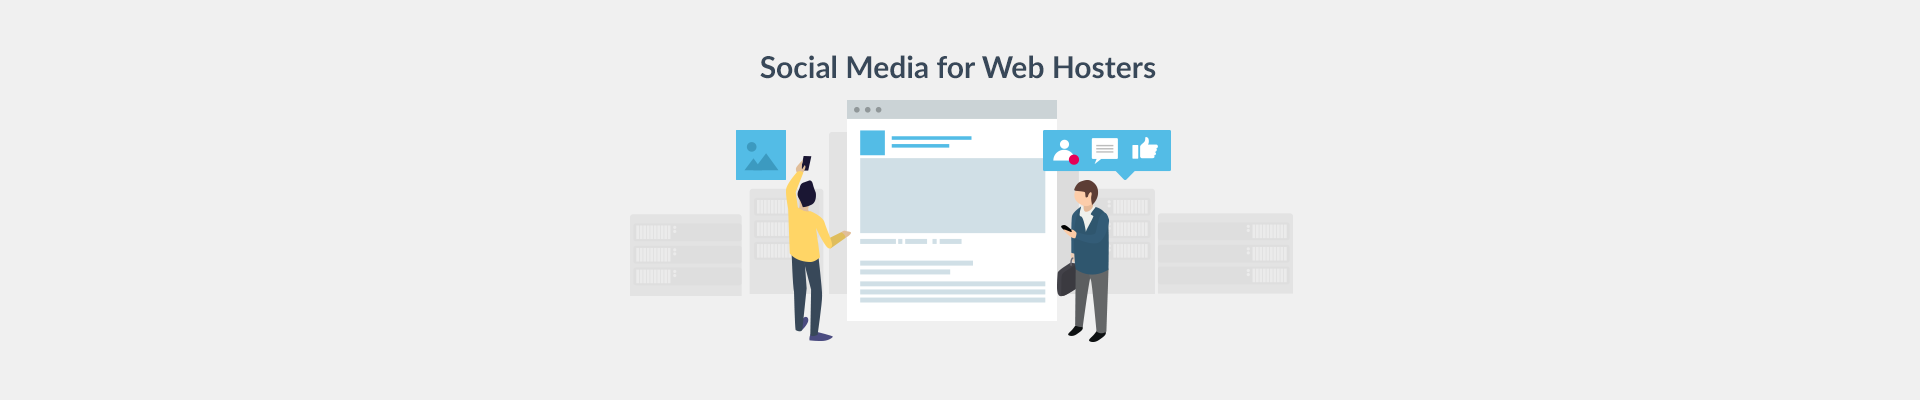 Social Media Tips For Web Hosting Industry